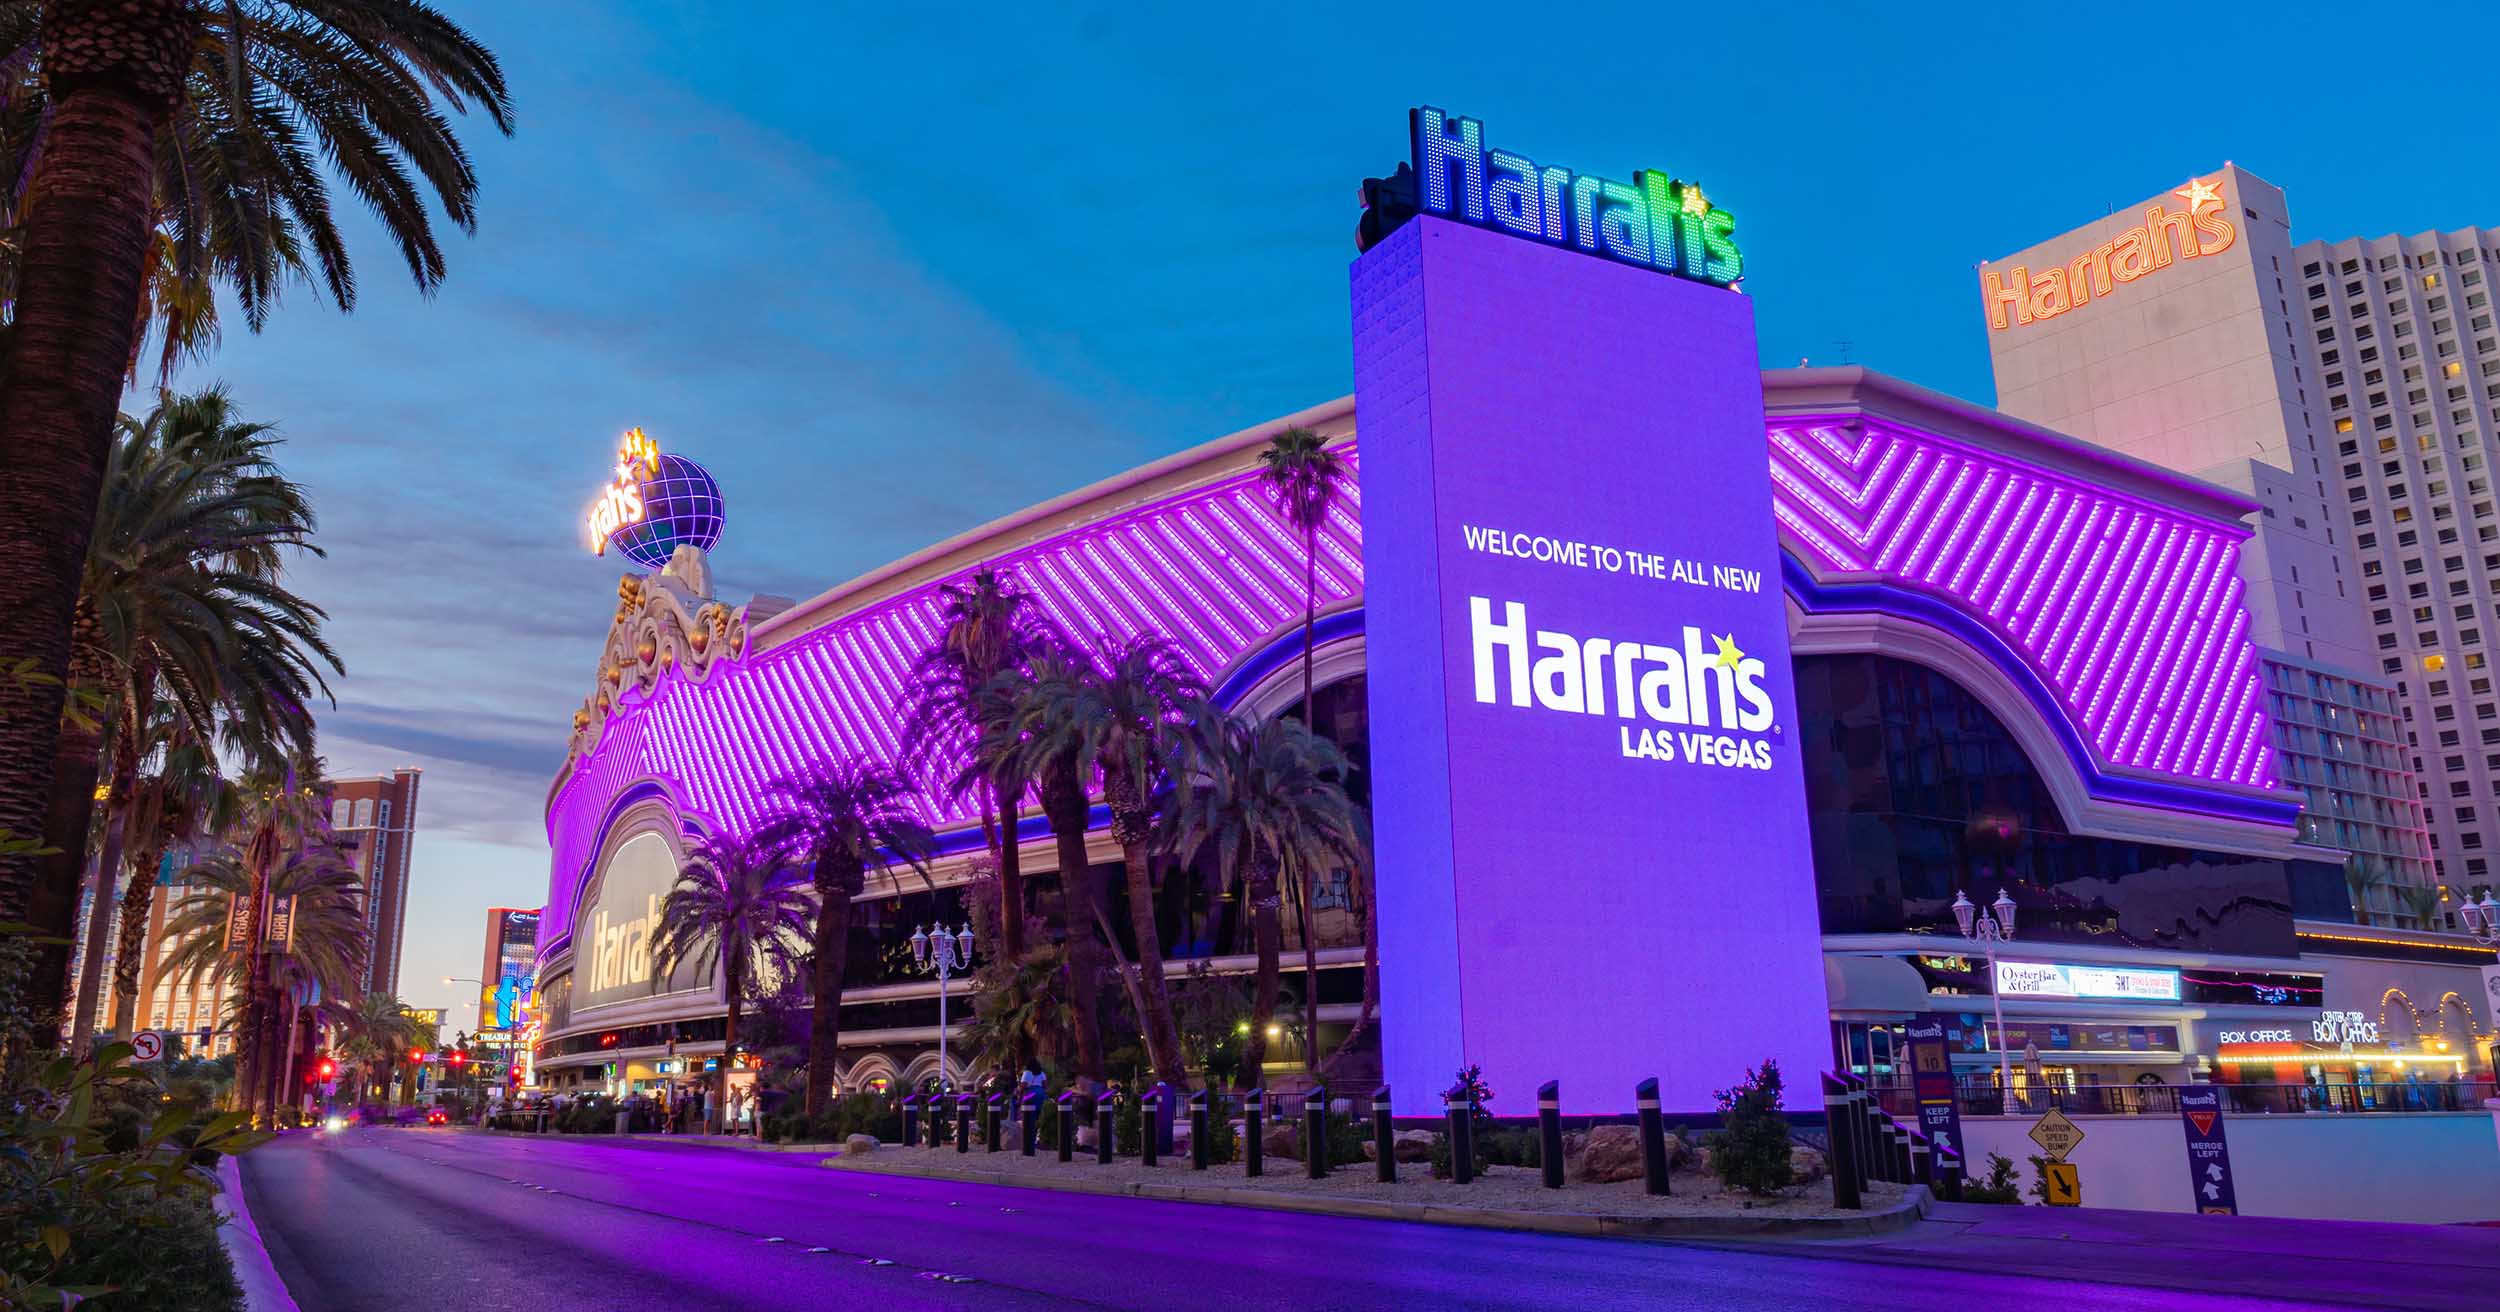 Harrah's Las Vegas Hotels - Good budget option on the Strip